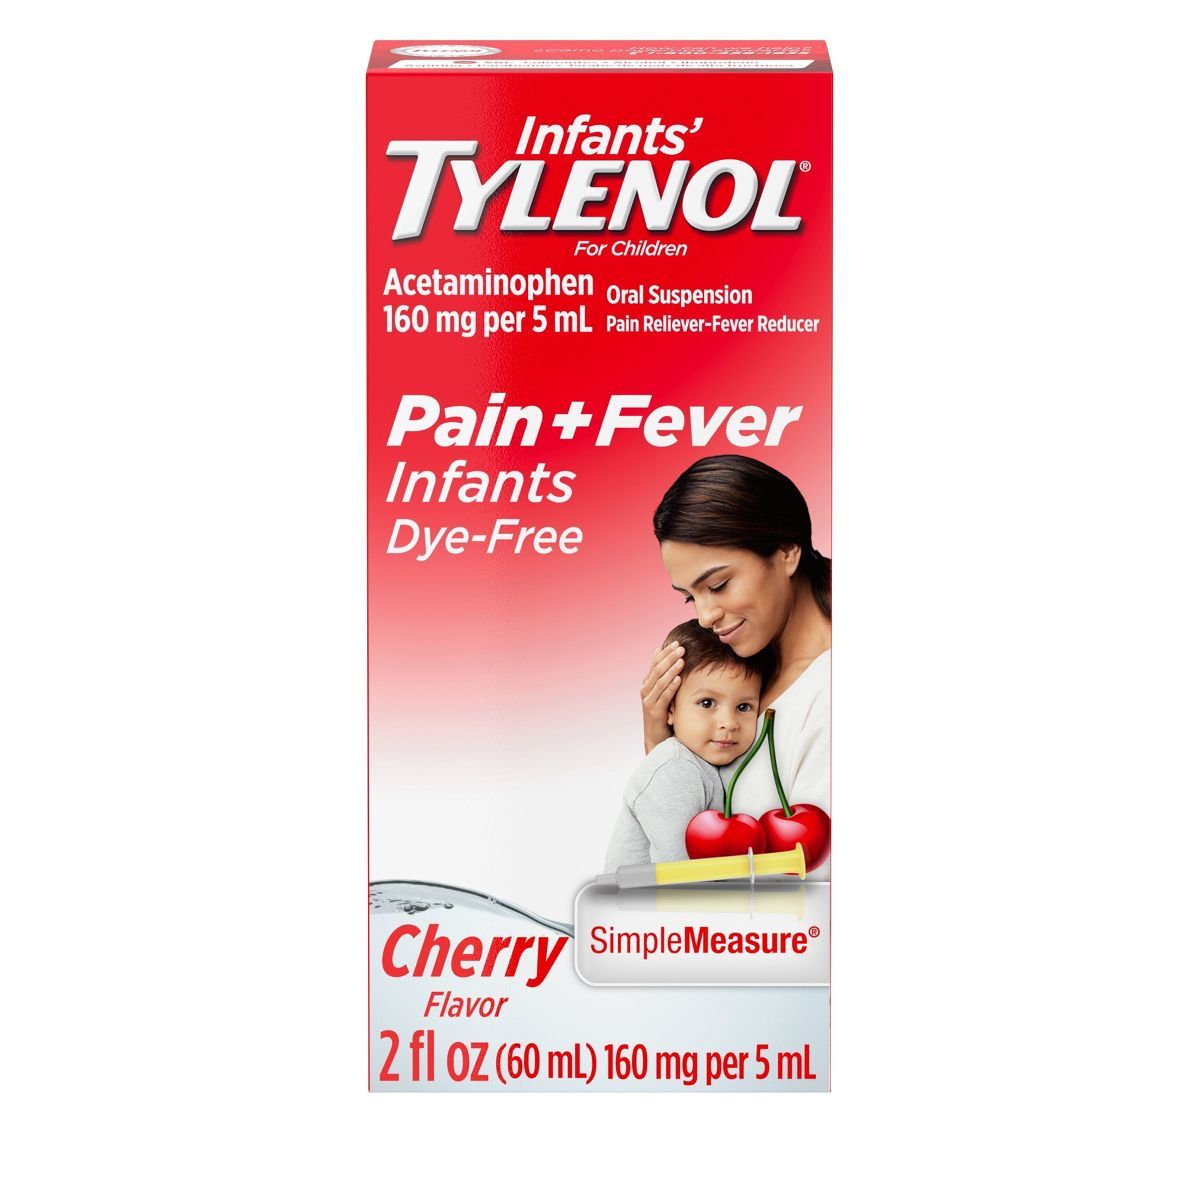 Infants' Tylenol Pain & Fever Reducer Liquid - Acetaminophen - Dye-Free Cherry - 2 fl oz | Target